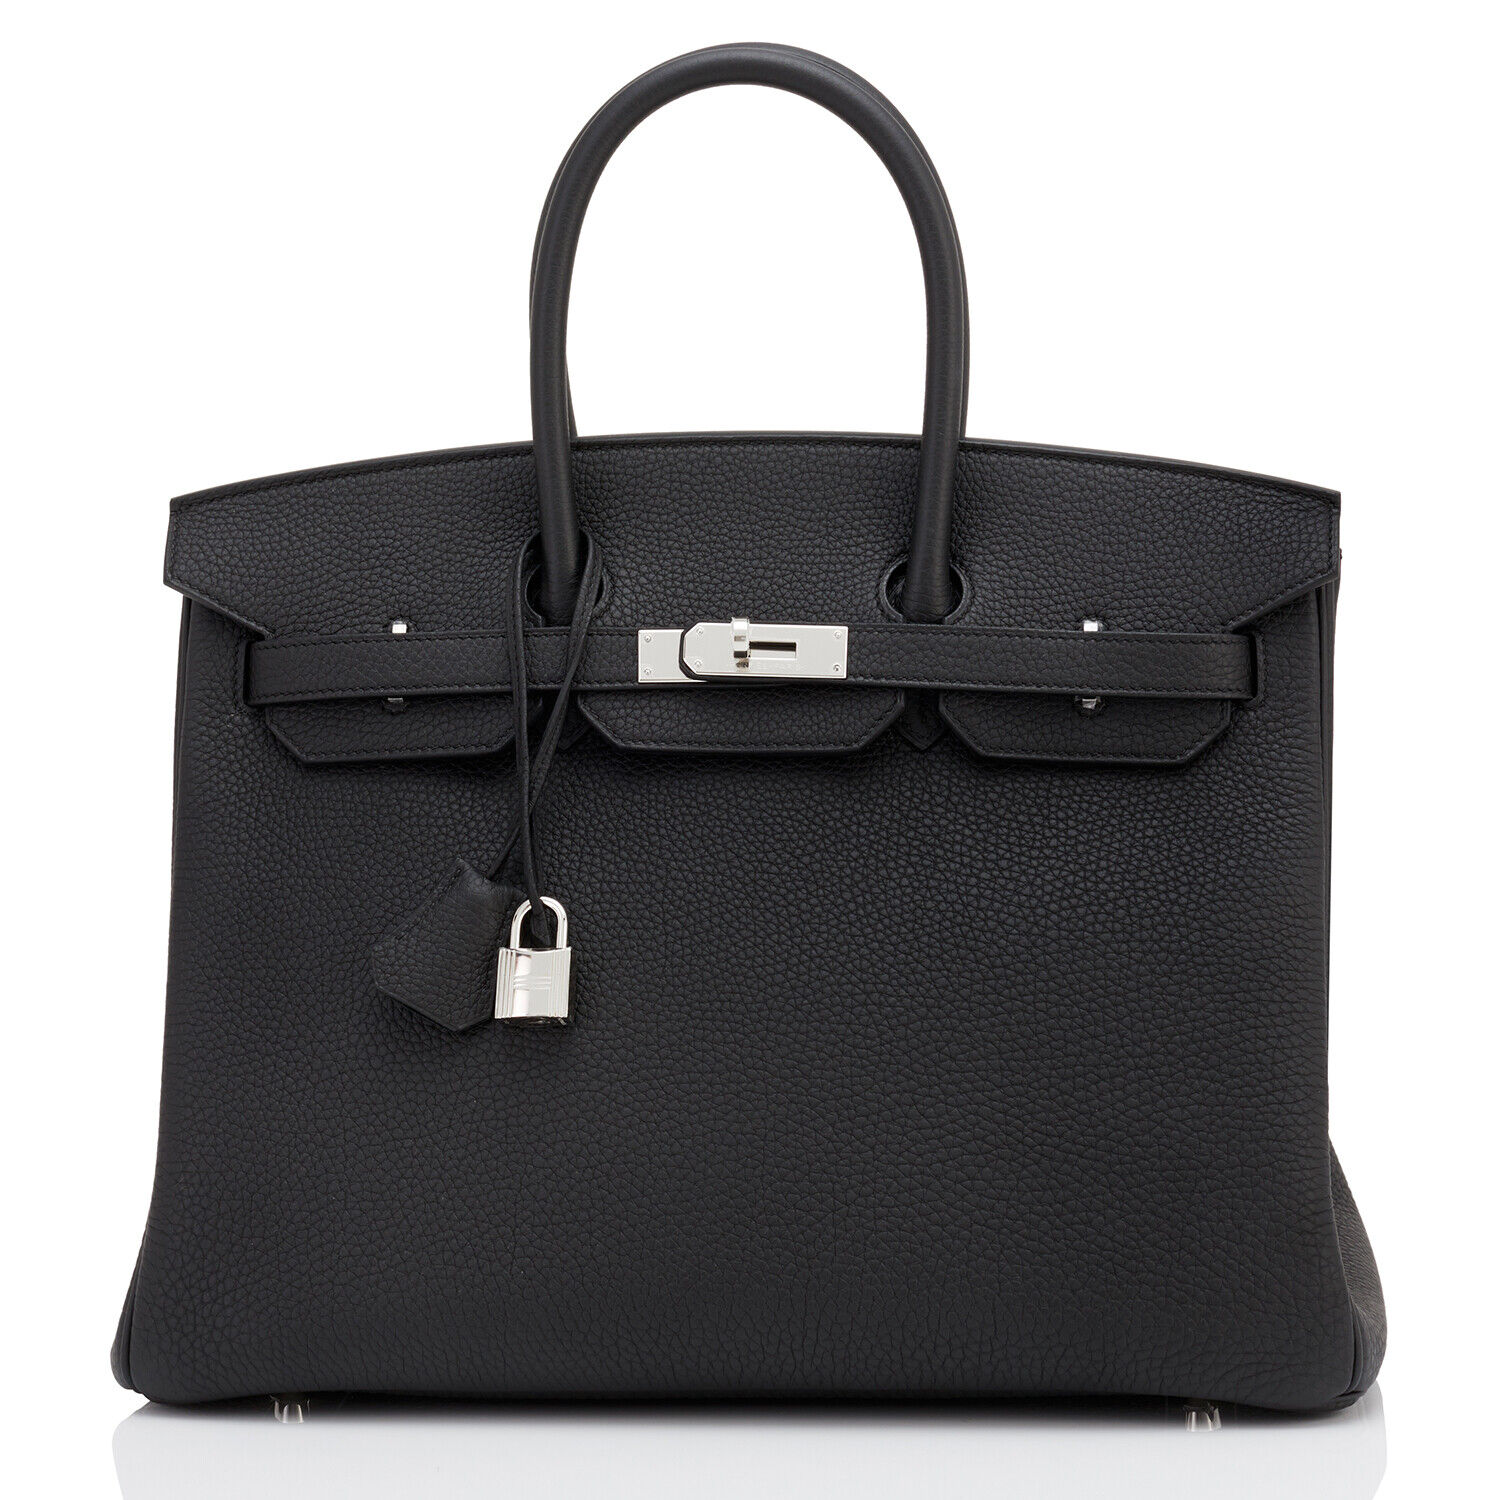 Hermes Black 35cm Birkin Bag Togo Palladium Hardware NEW 2